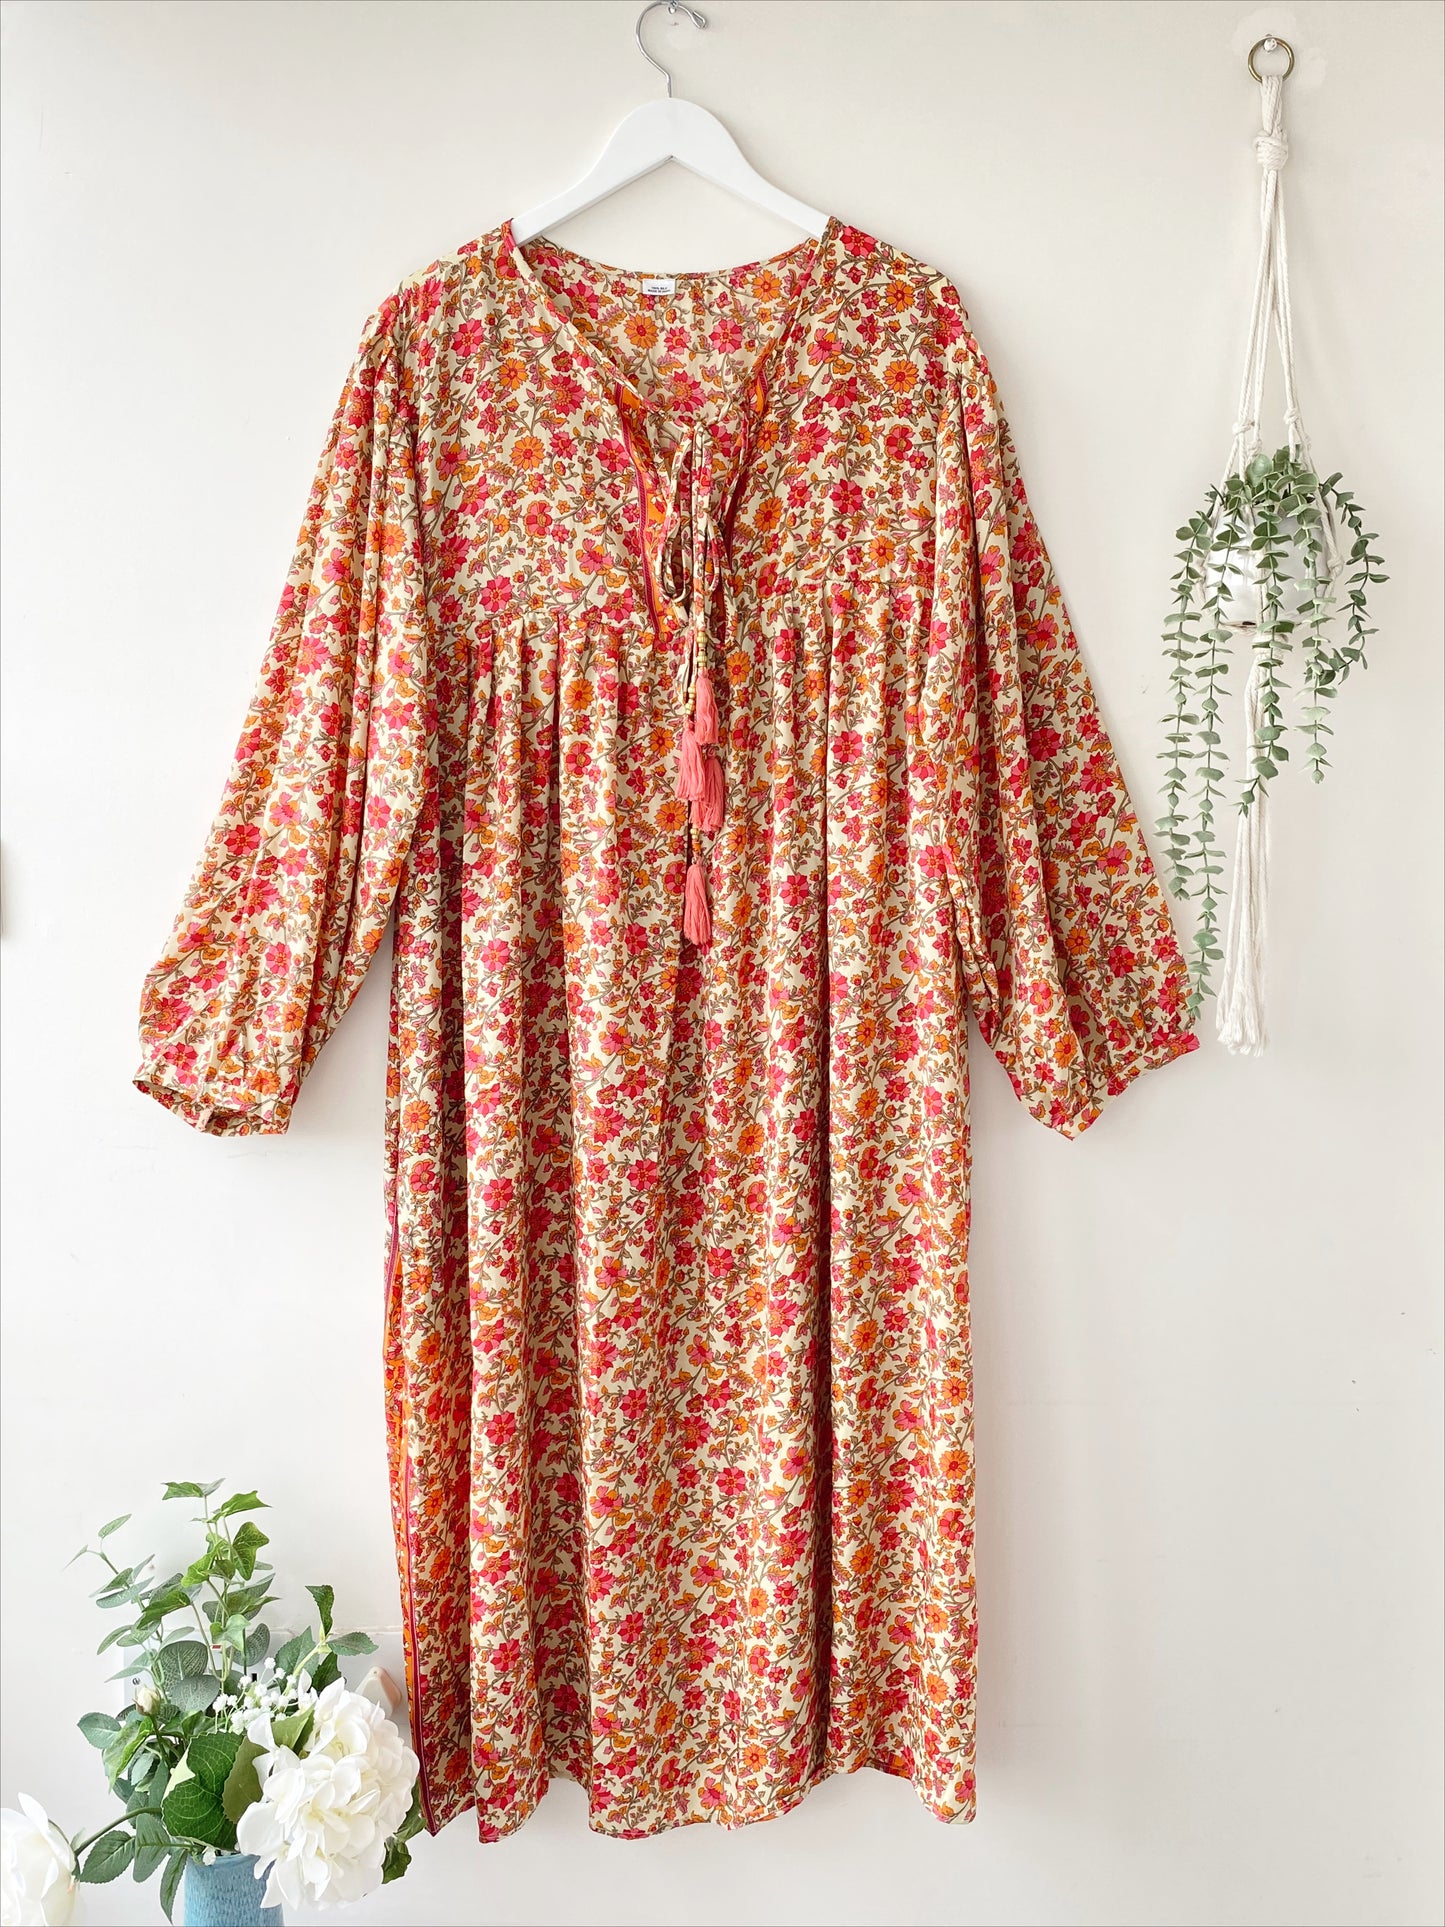 Florence beige/pink floral-print silk dress free size UK 8-16DRESSES